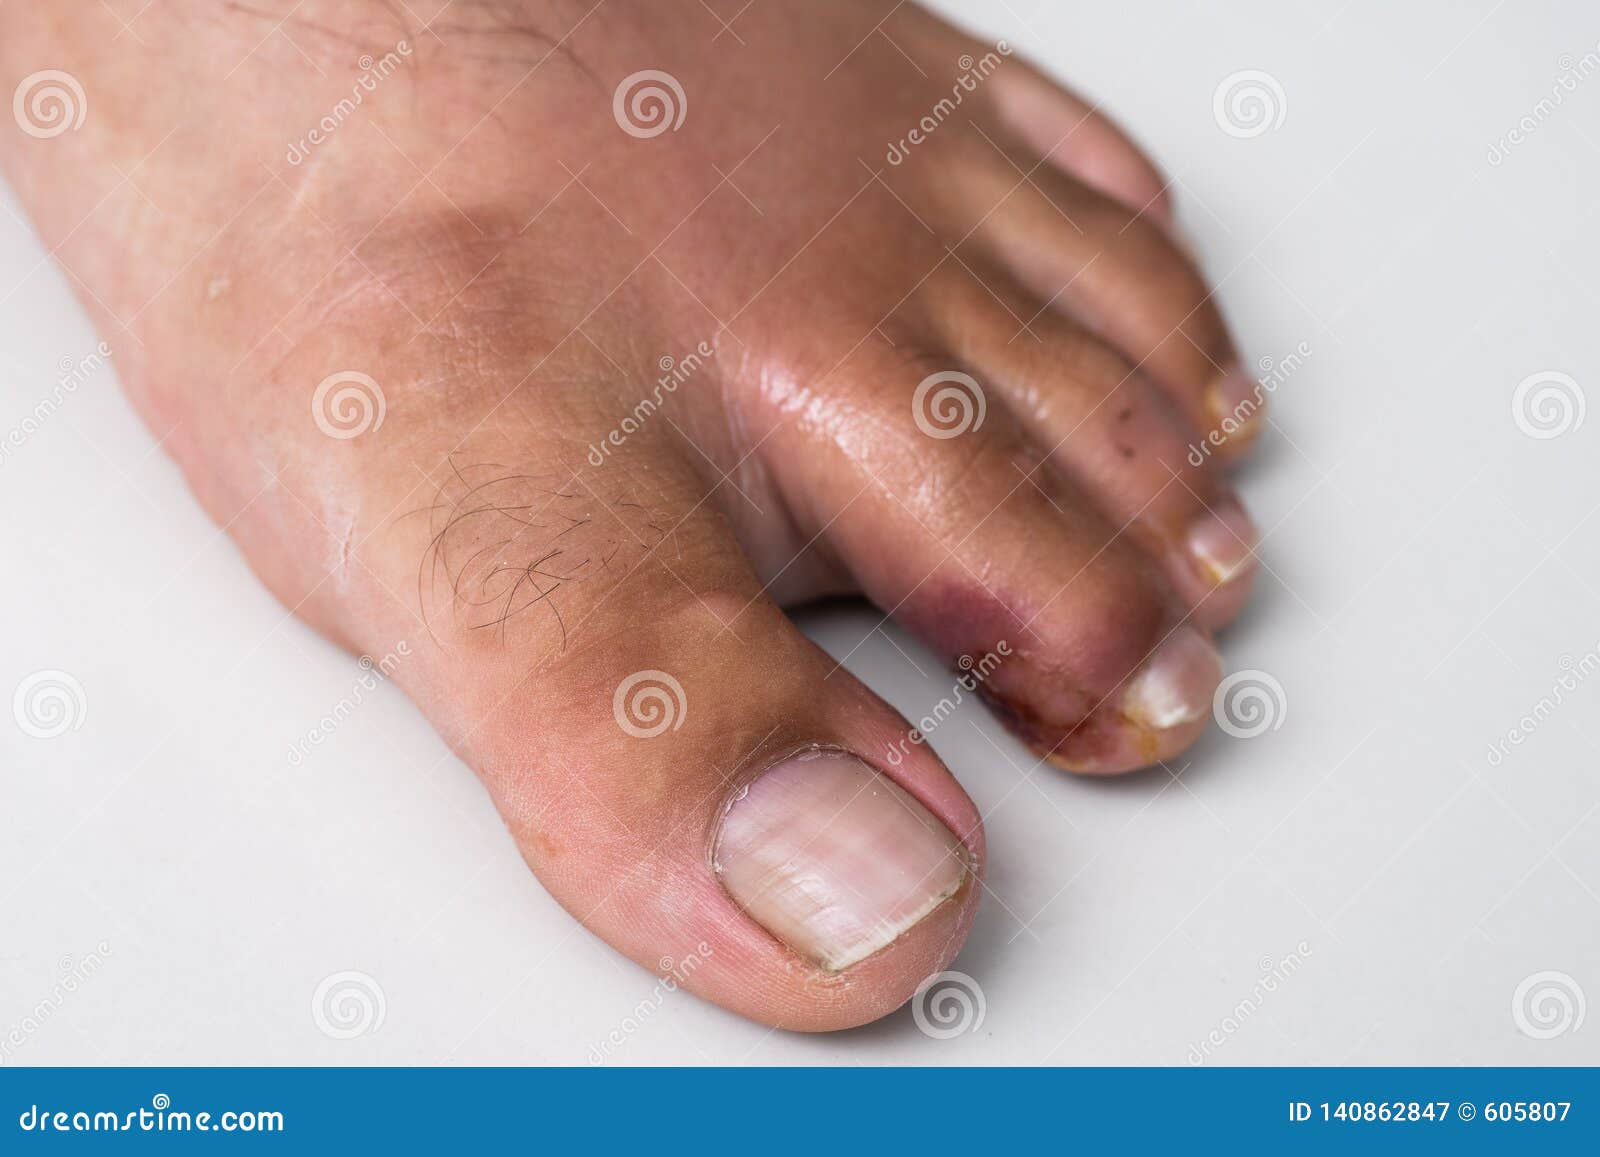 eczema or psoriasis on feet)